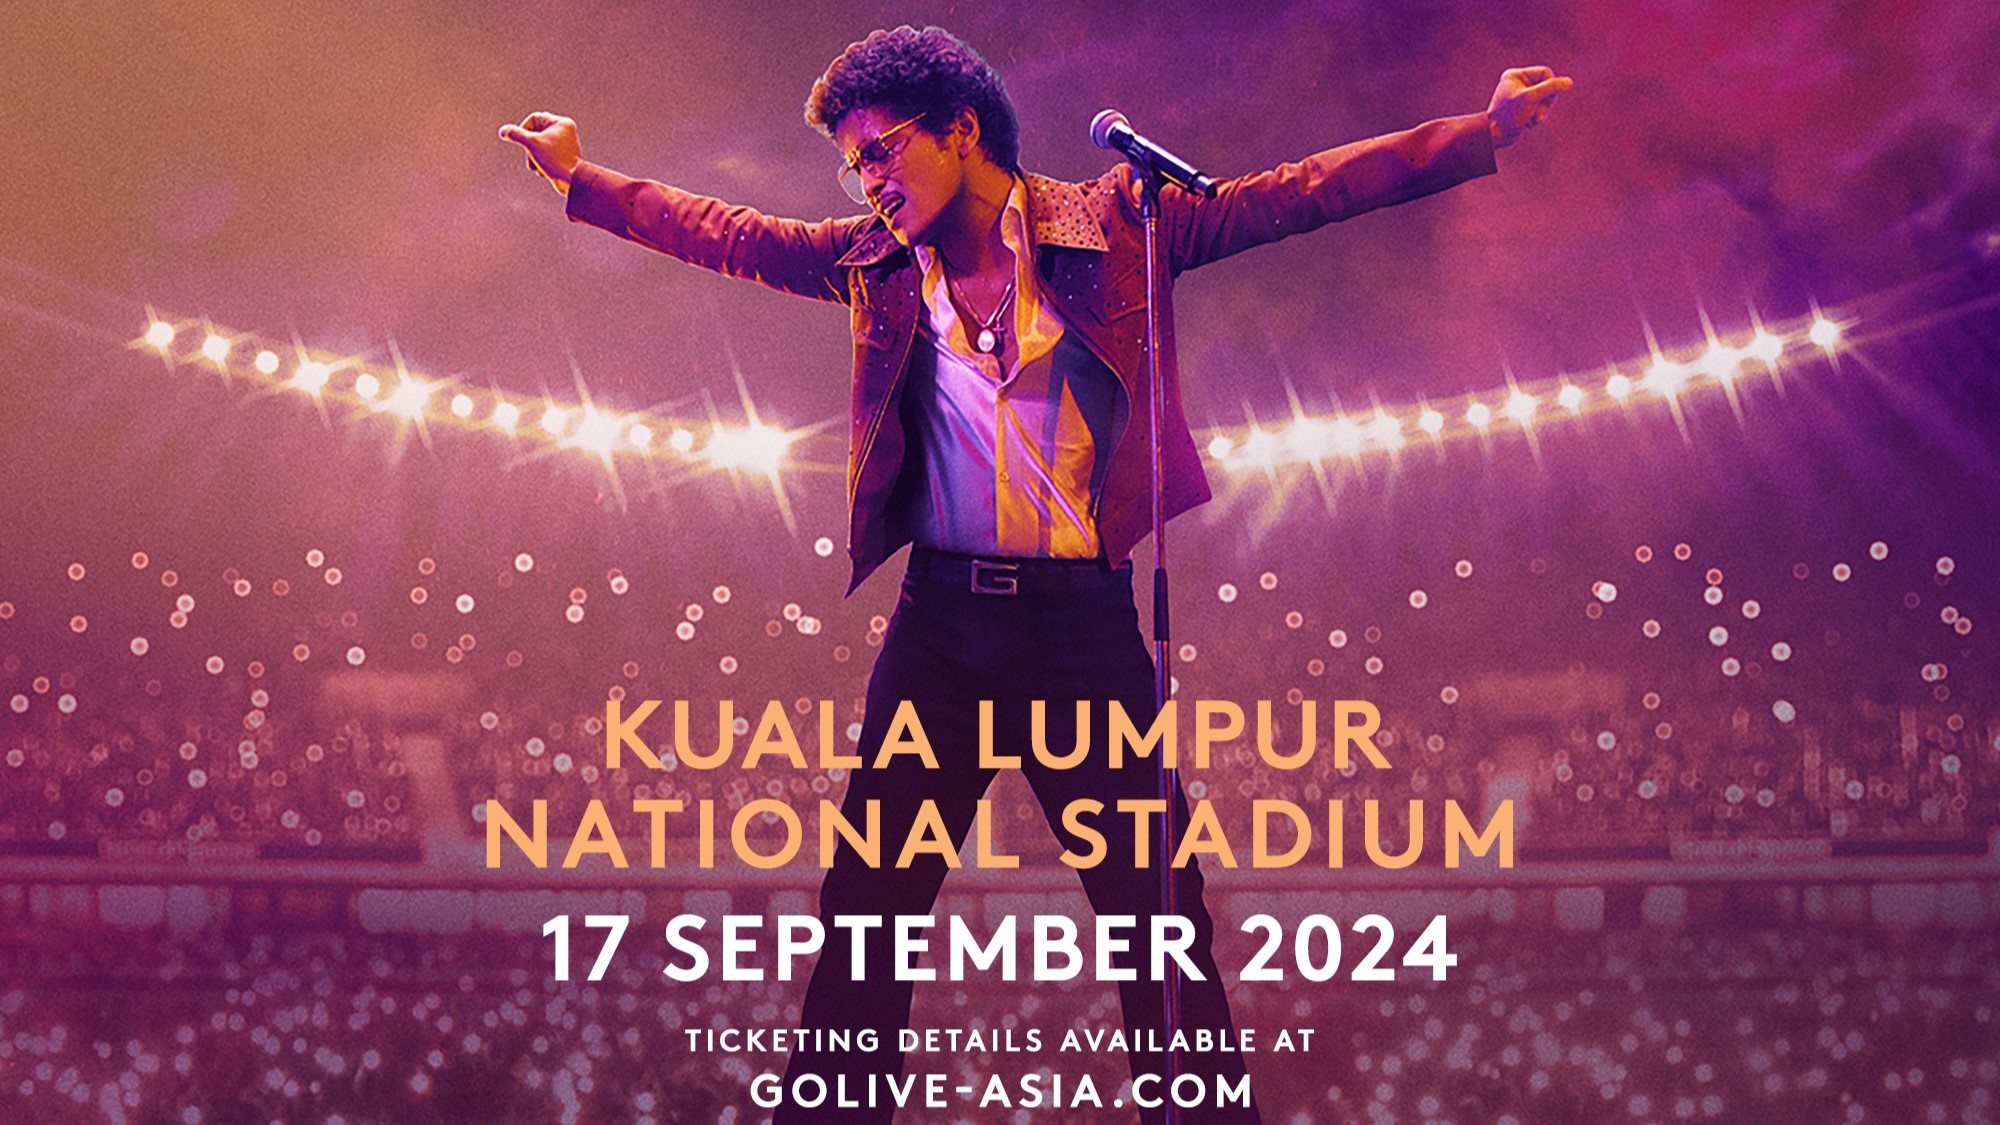 Bruno Mars’ 24K Magic in Malaysia this September 